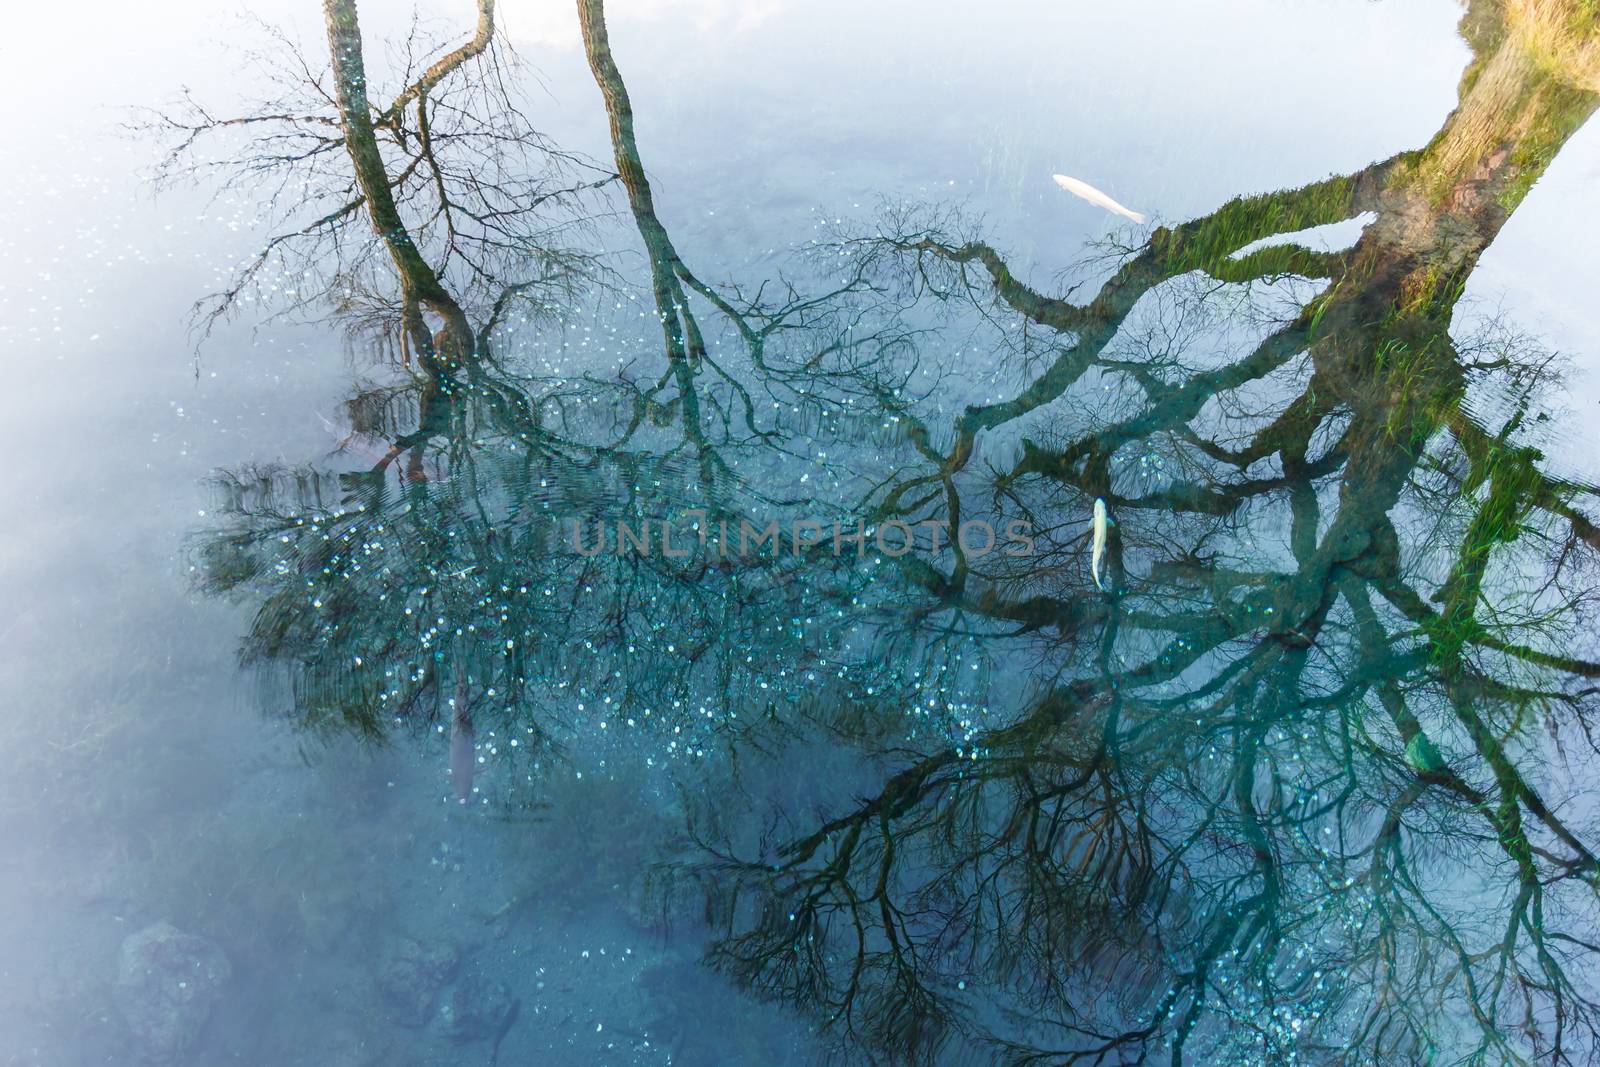 Tree reflect in pond at Oshino Hakkai, Japan.